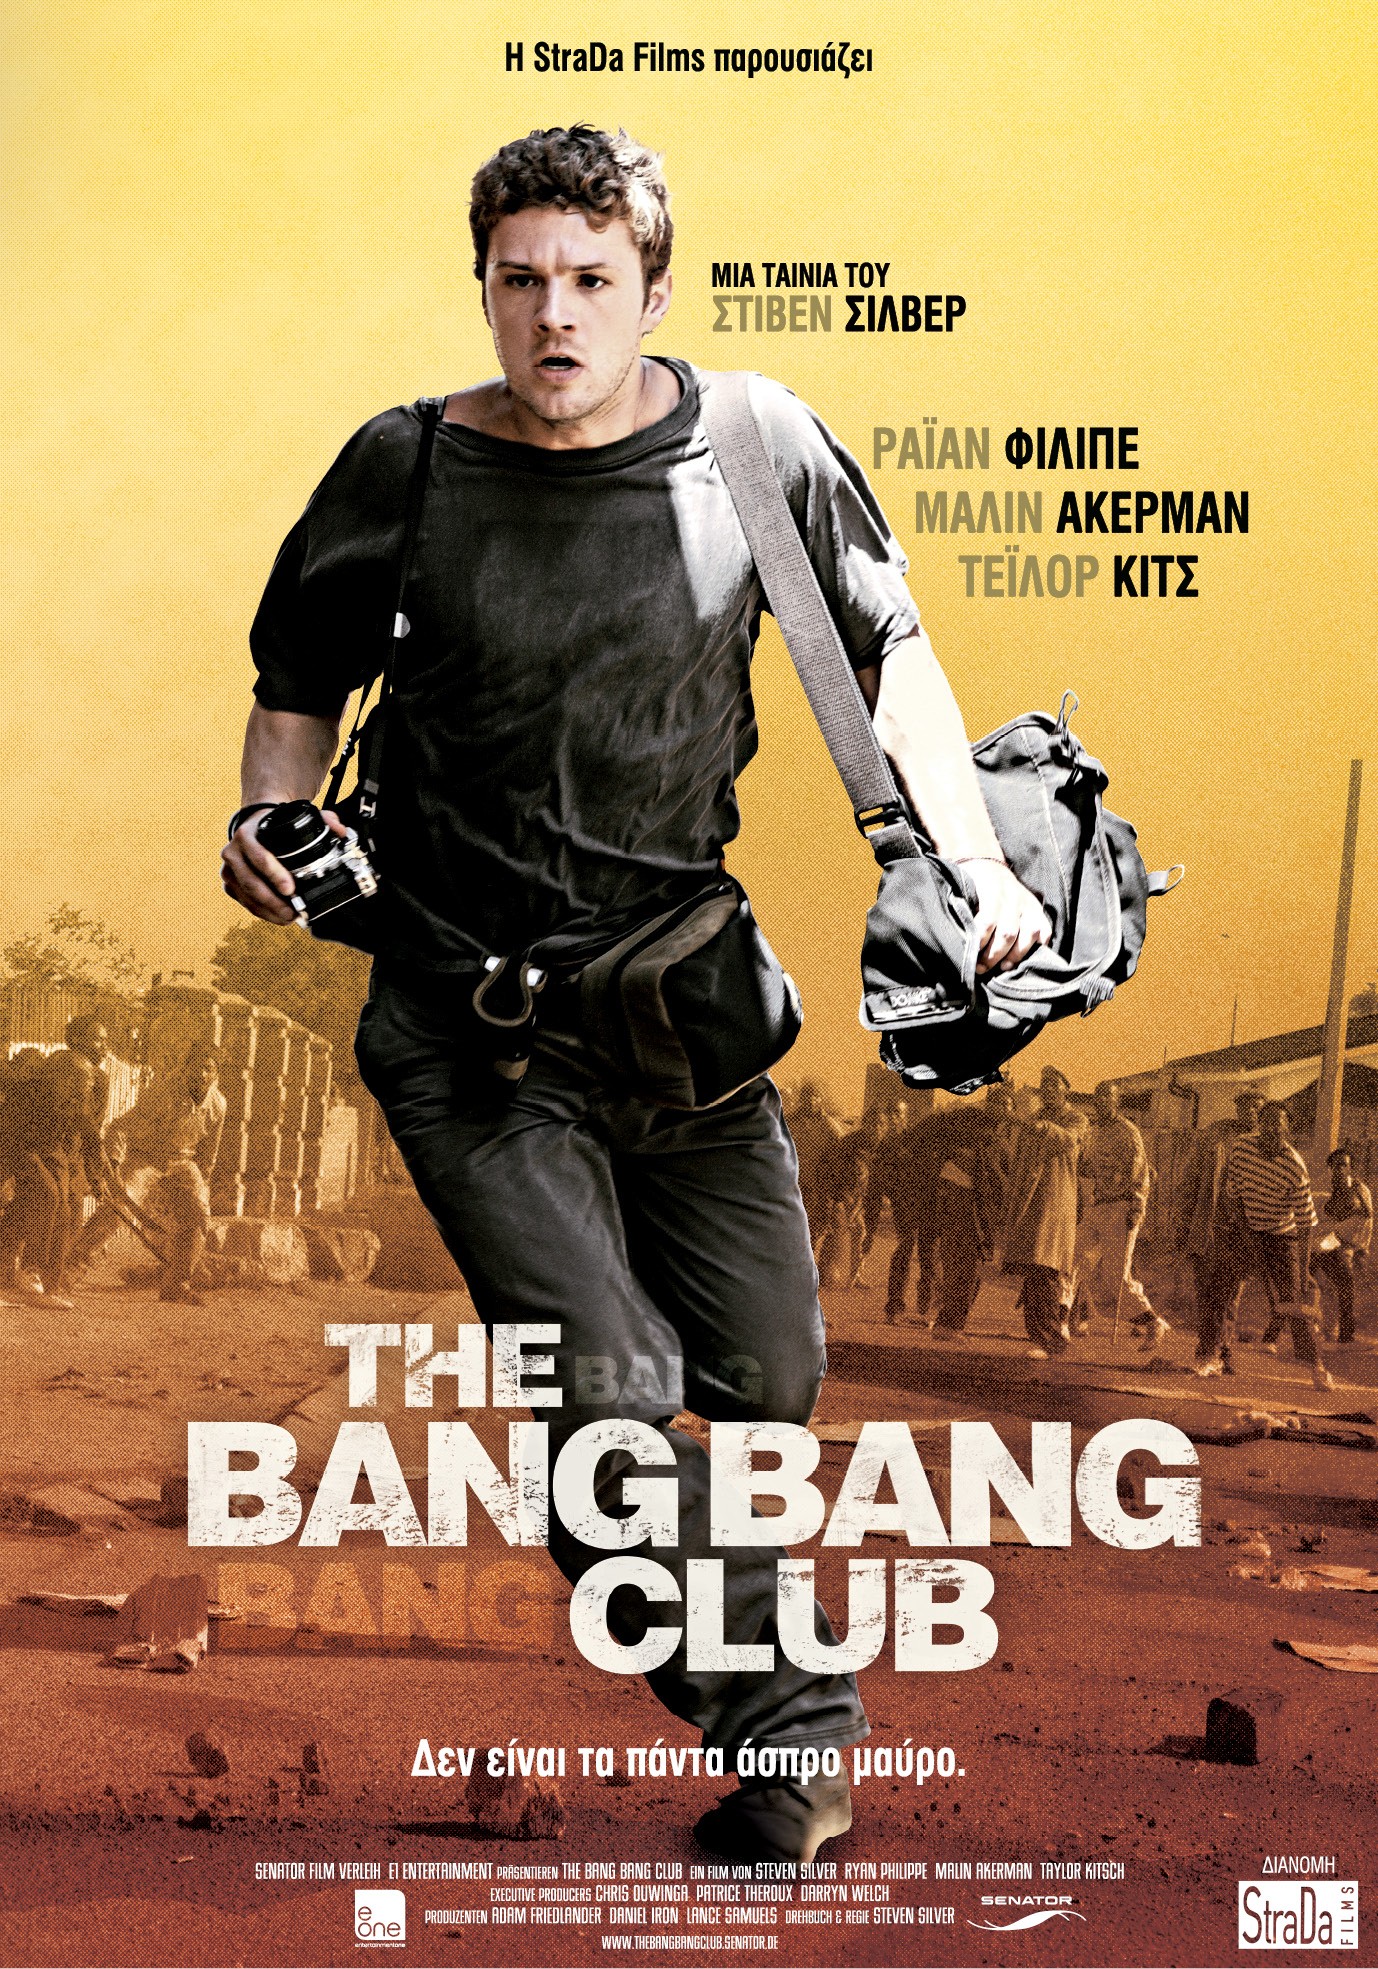 Bang bang club. The Bang Bang Club 2010. Клуб безбашенных Постер. Клуб Bang-Bang,.